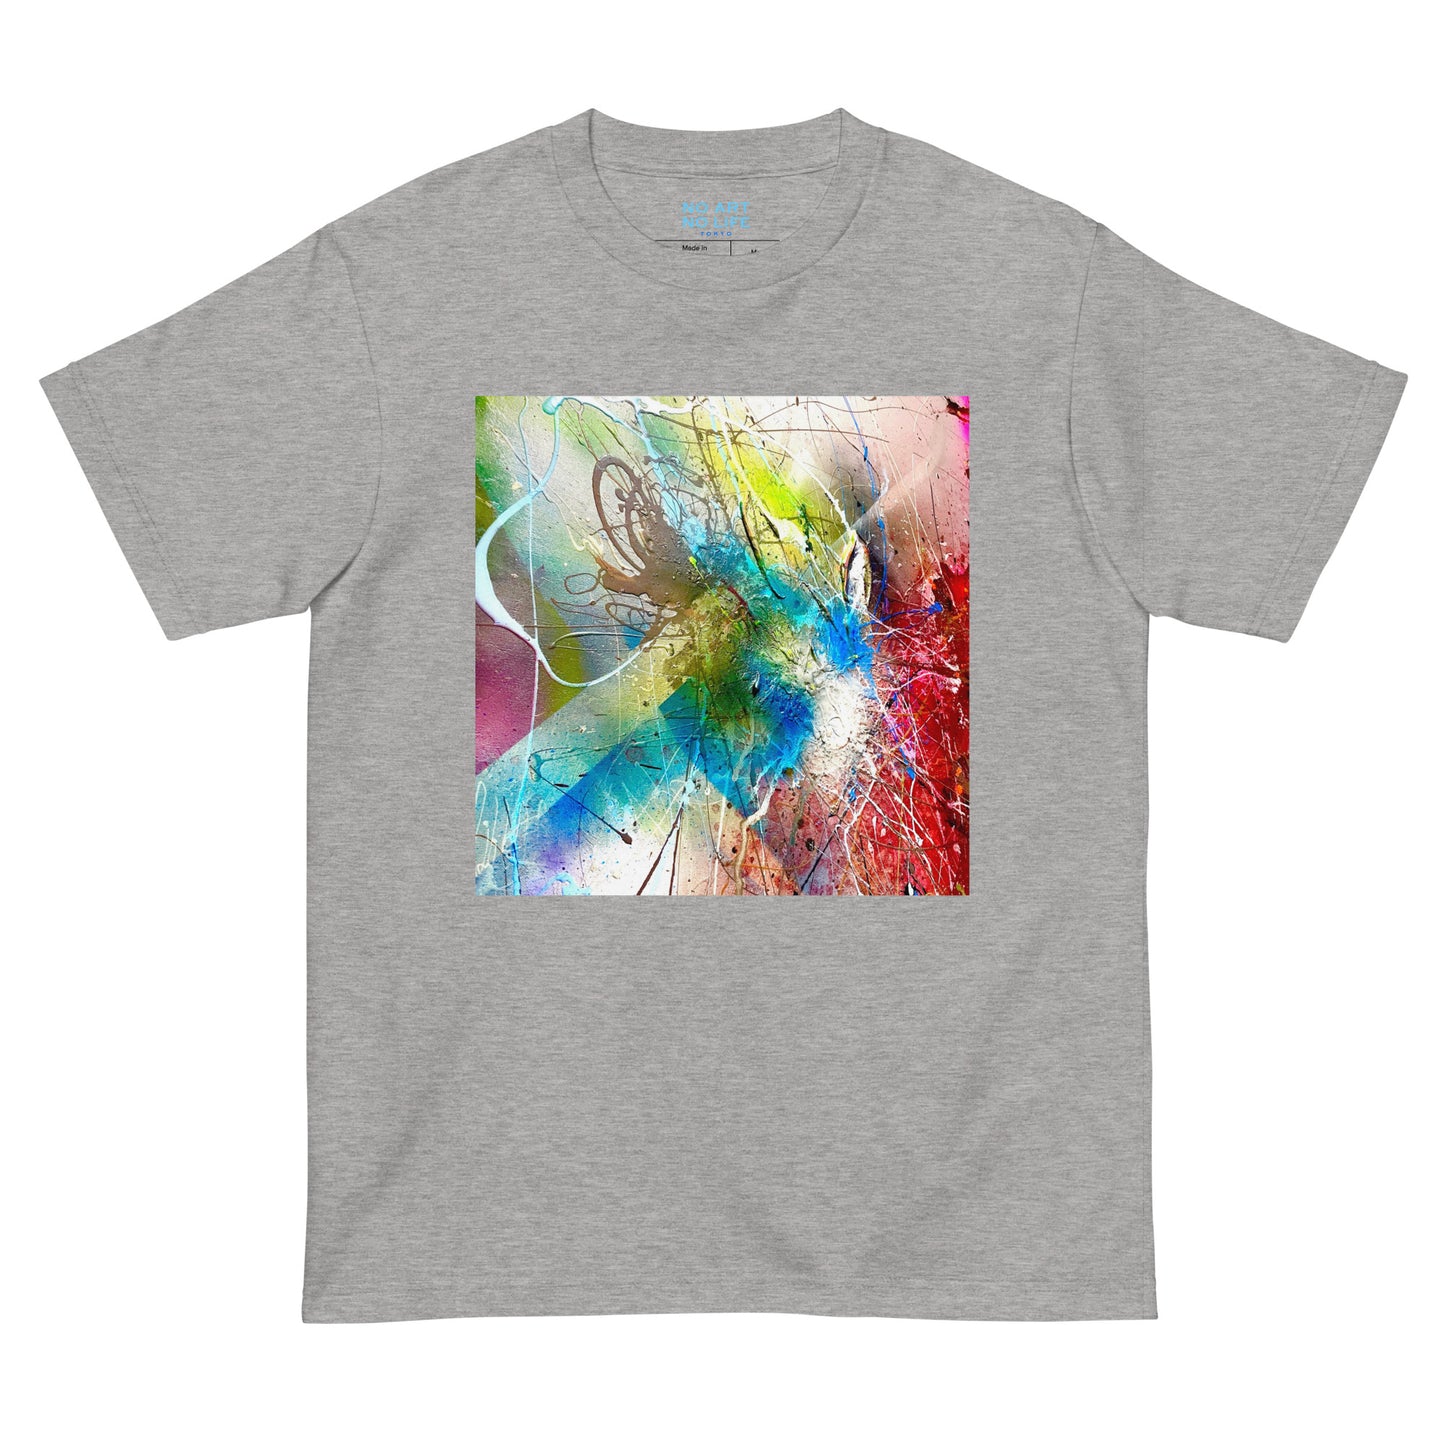 042-Art-Cise-2-前面プリントTシャツ-アートをデザイン